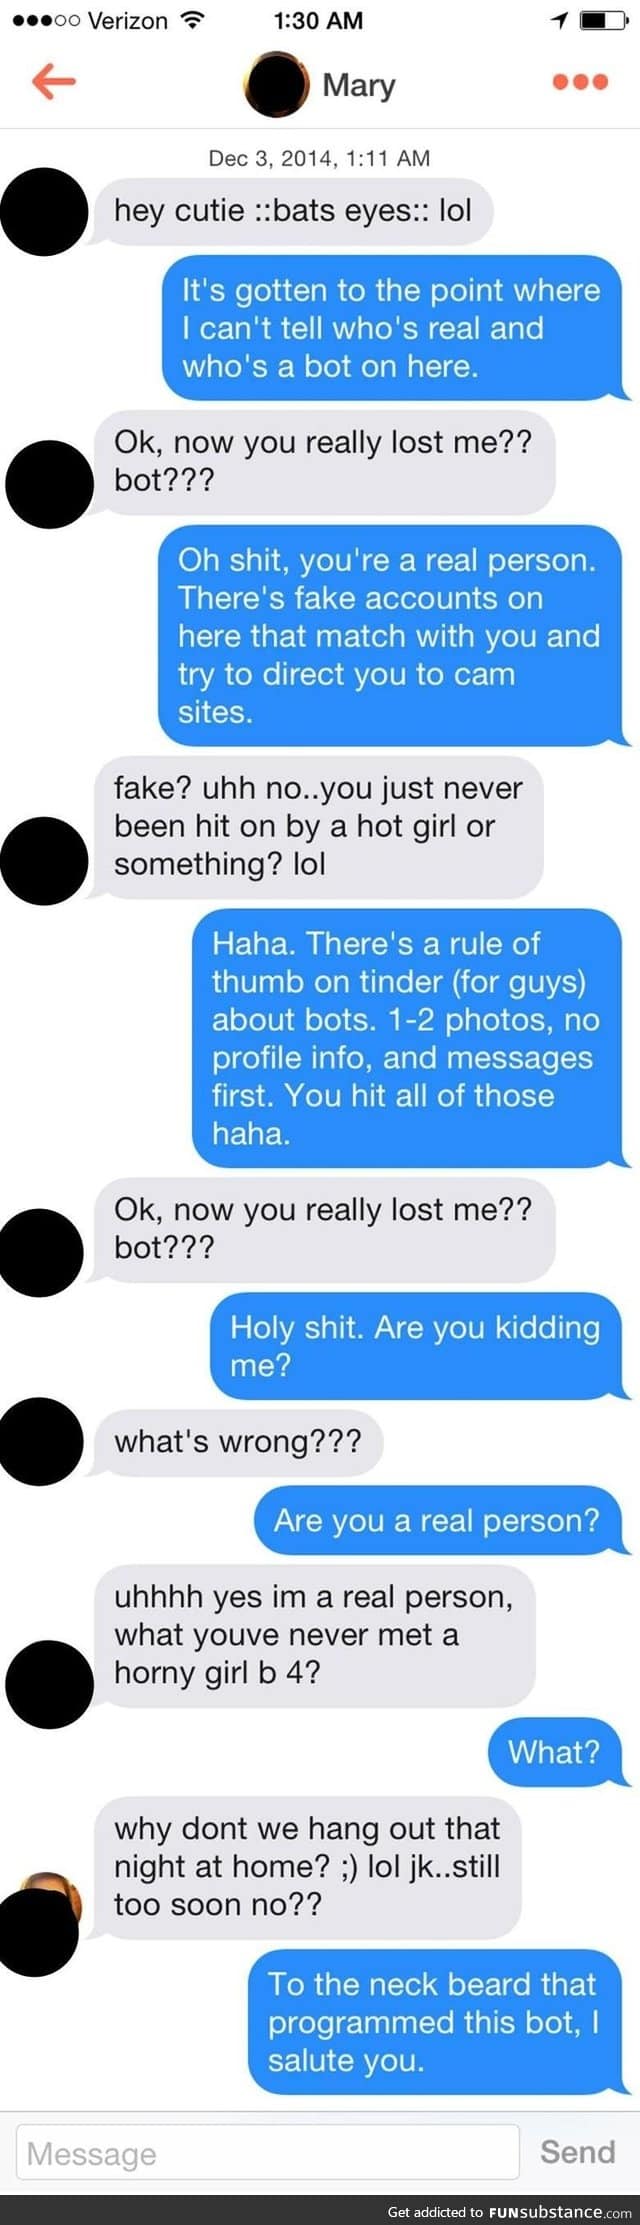 Bot or not?